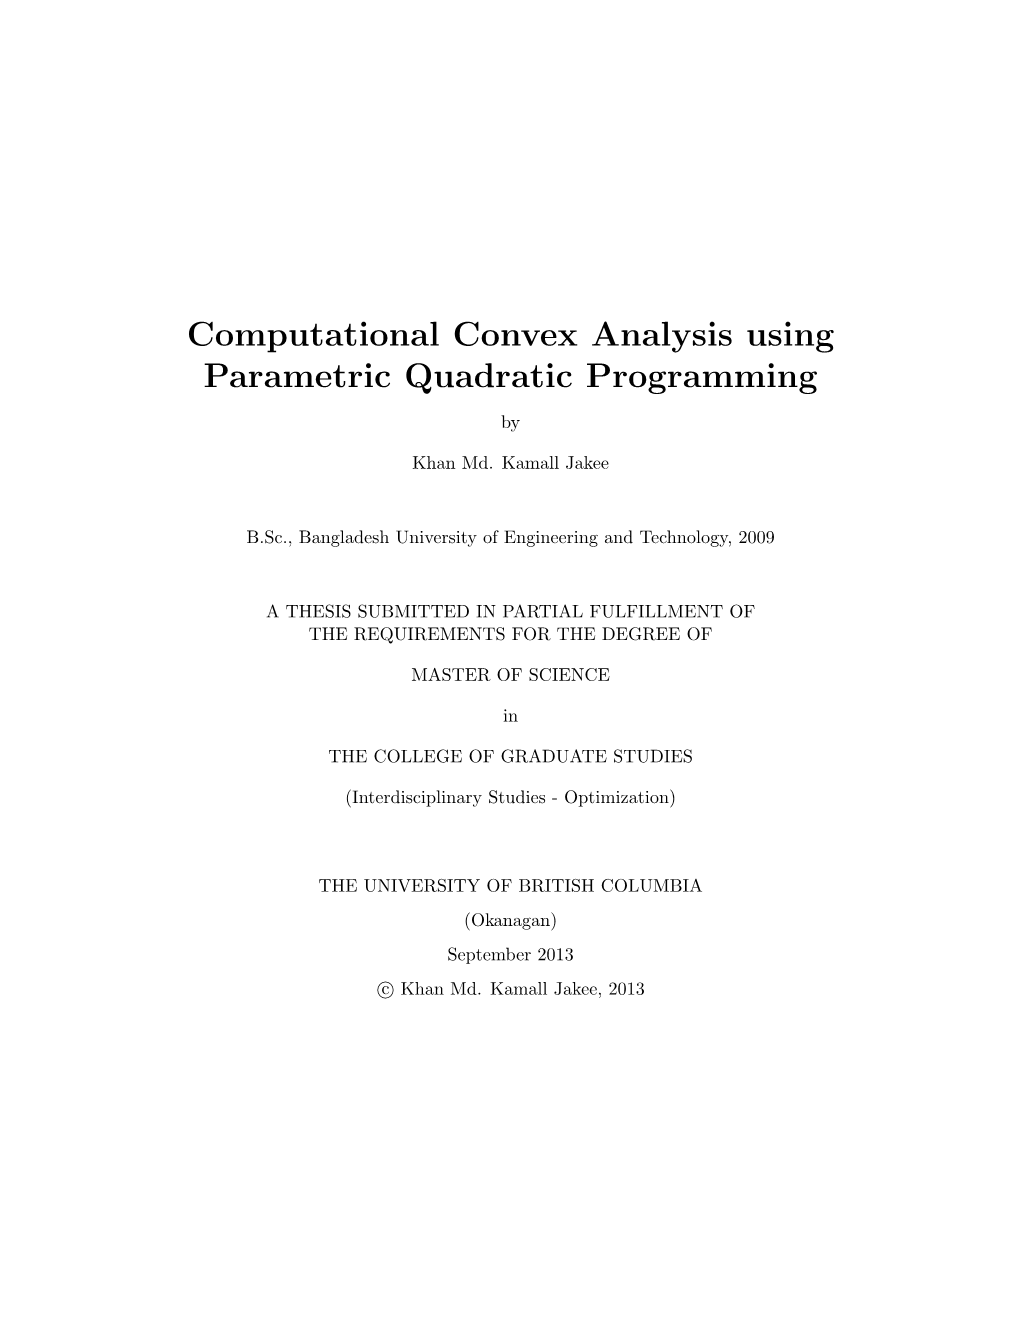 Computational Convex Analysis Using Parametric Quadratic Programming